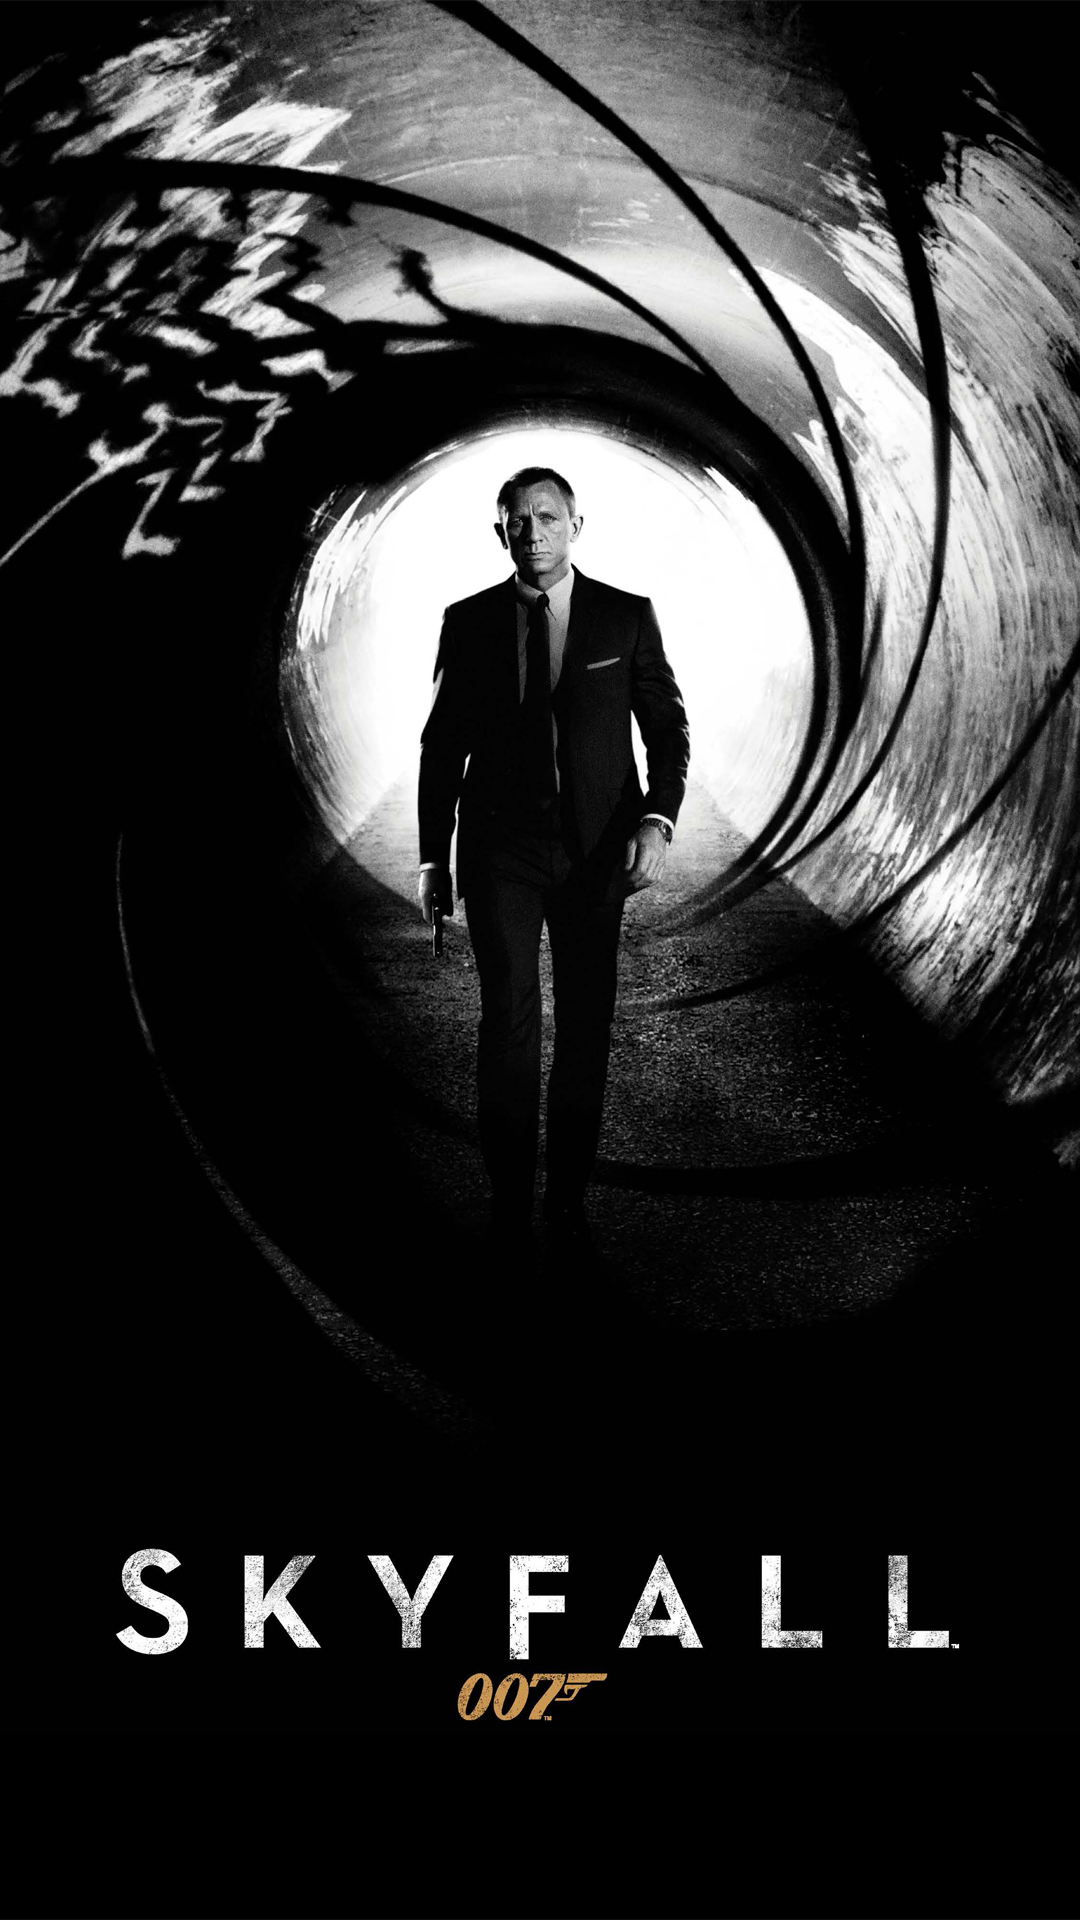 James Bond Wallpaper Iphone 1080x19 Wallpaper Teahub Io